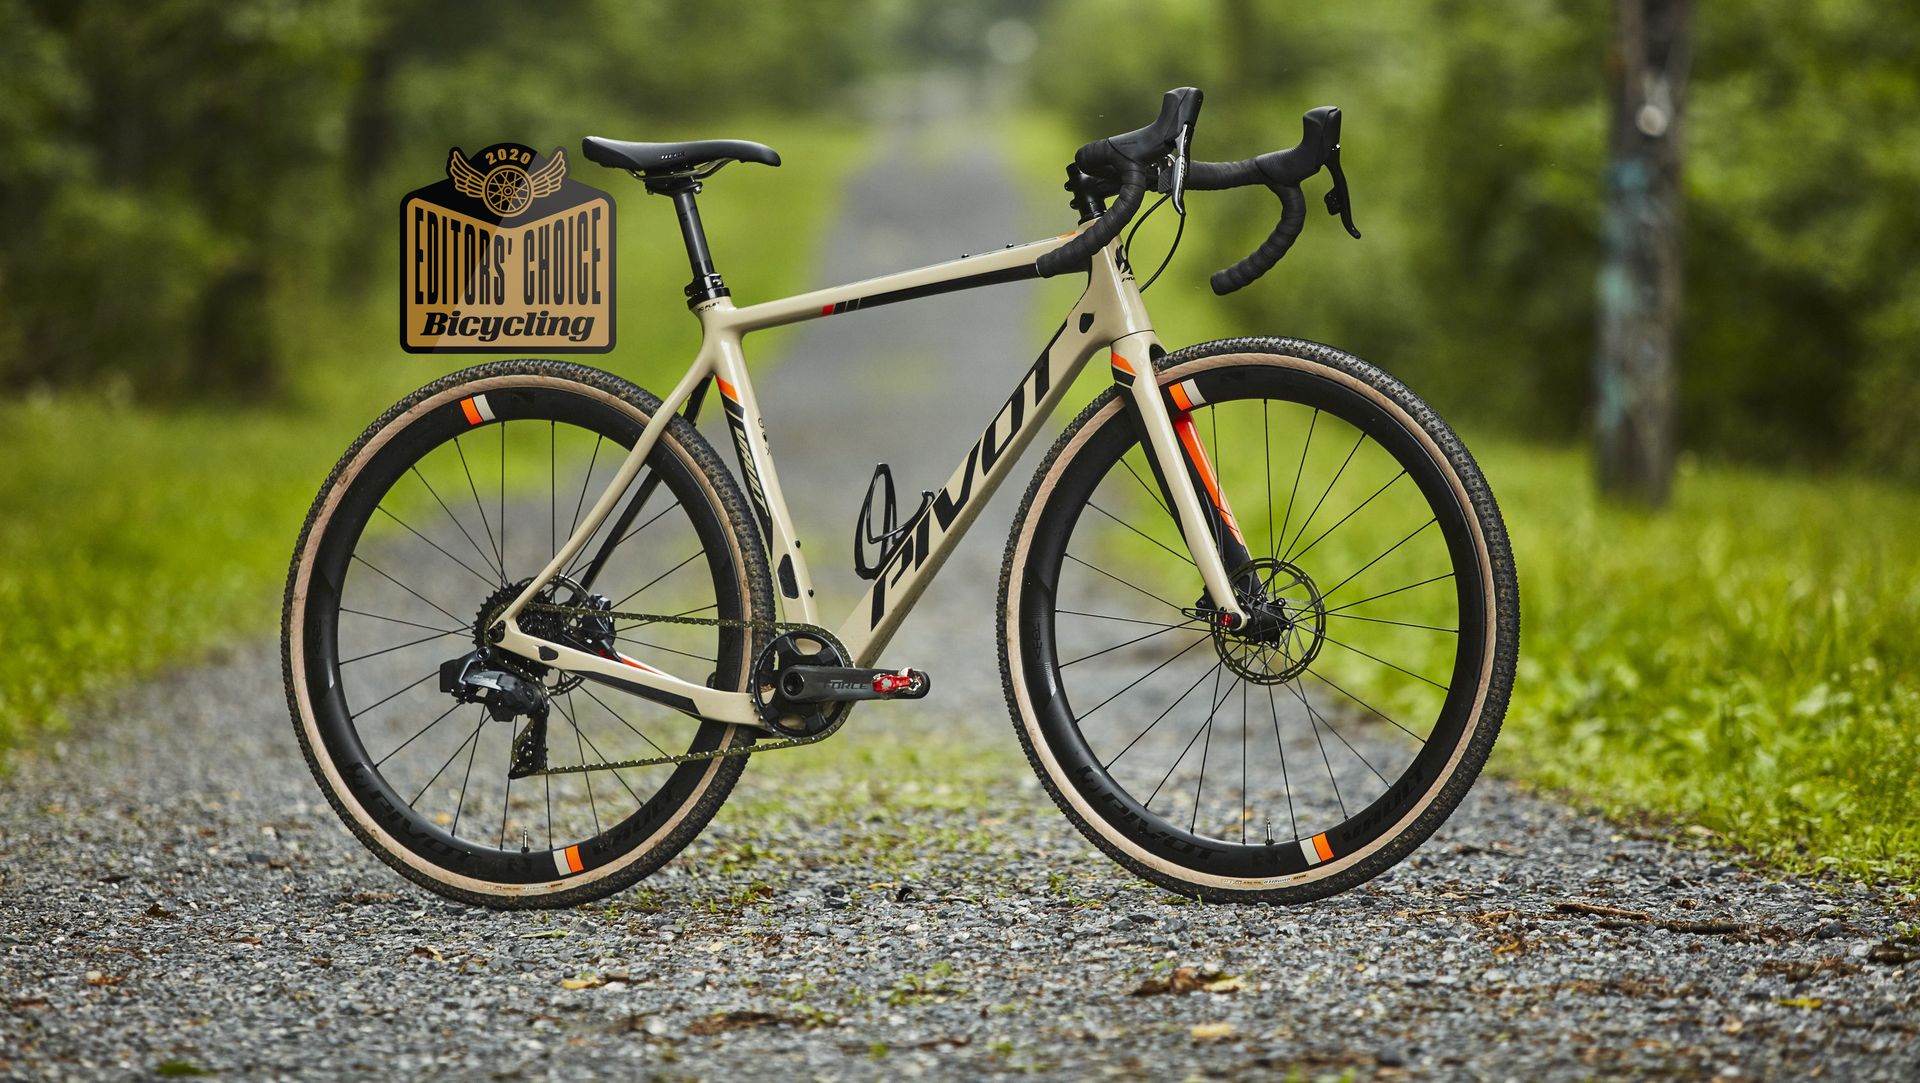 Land vehicle, Bicycle, Bicycle wheel, Vehicle, Bicycle part, Bicycle frame, Bicycle tire, Bicycle handlebar, Cycle sport, Hybrid bicycle, 